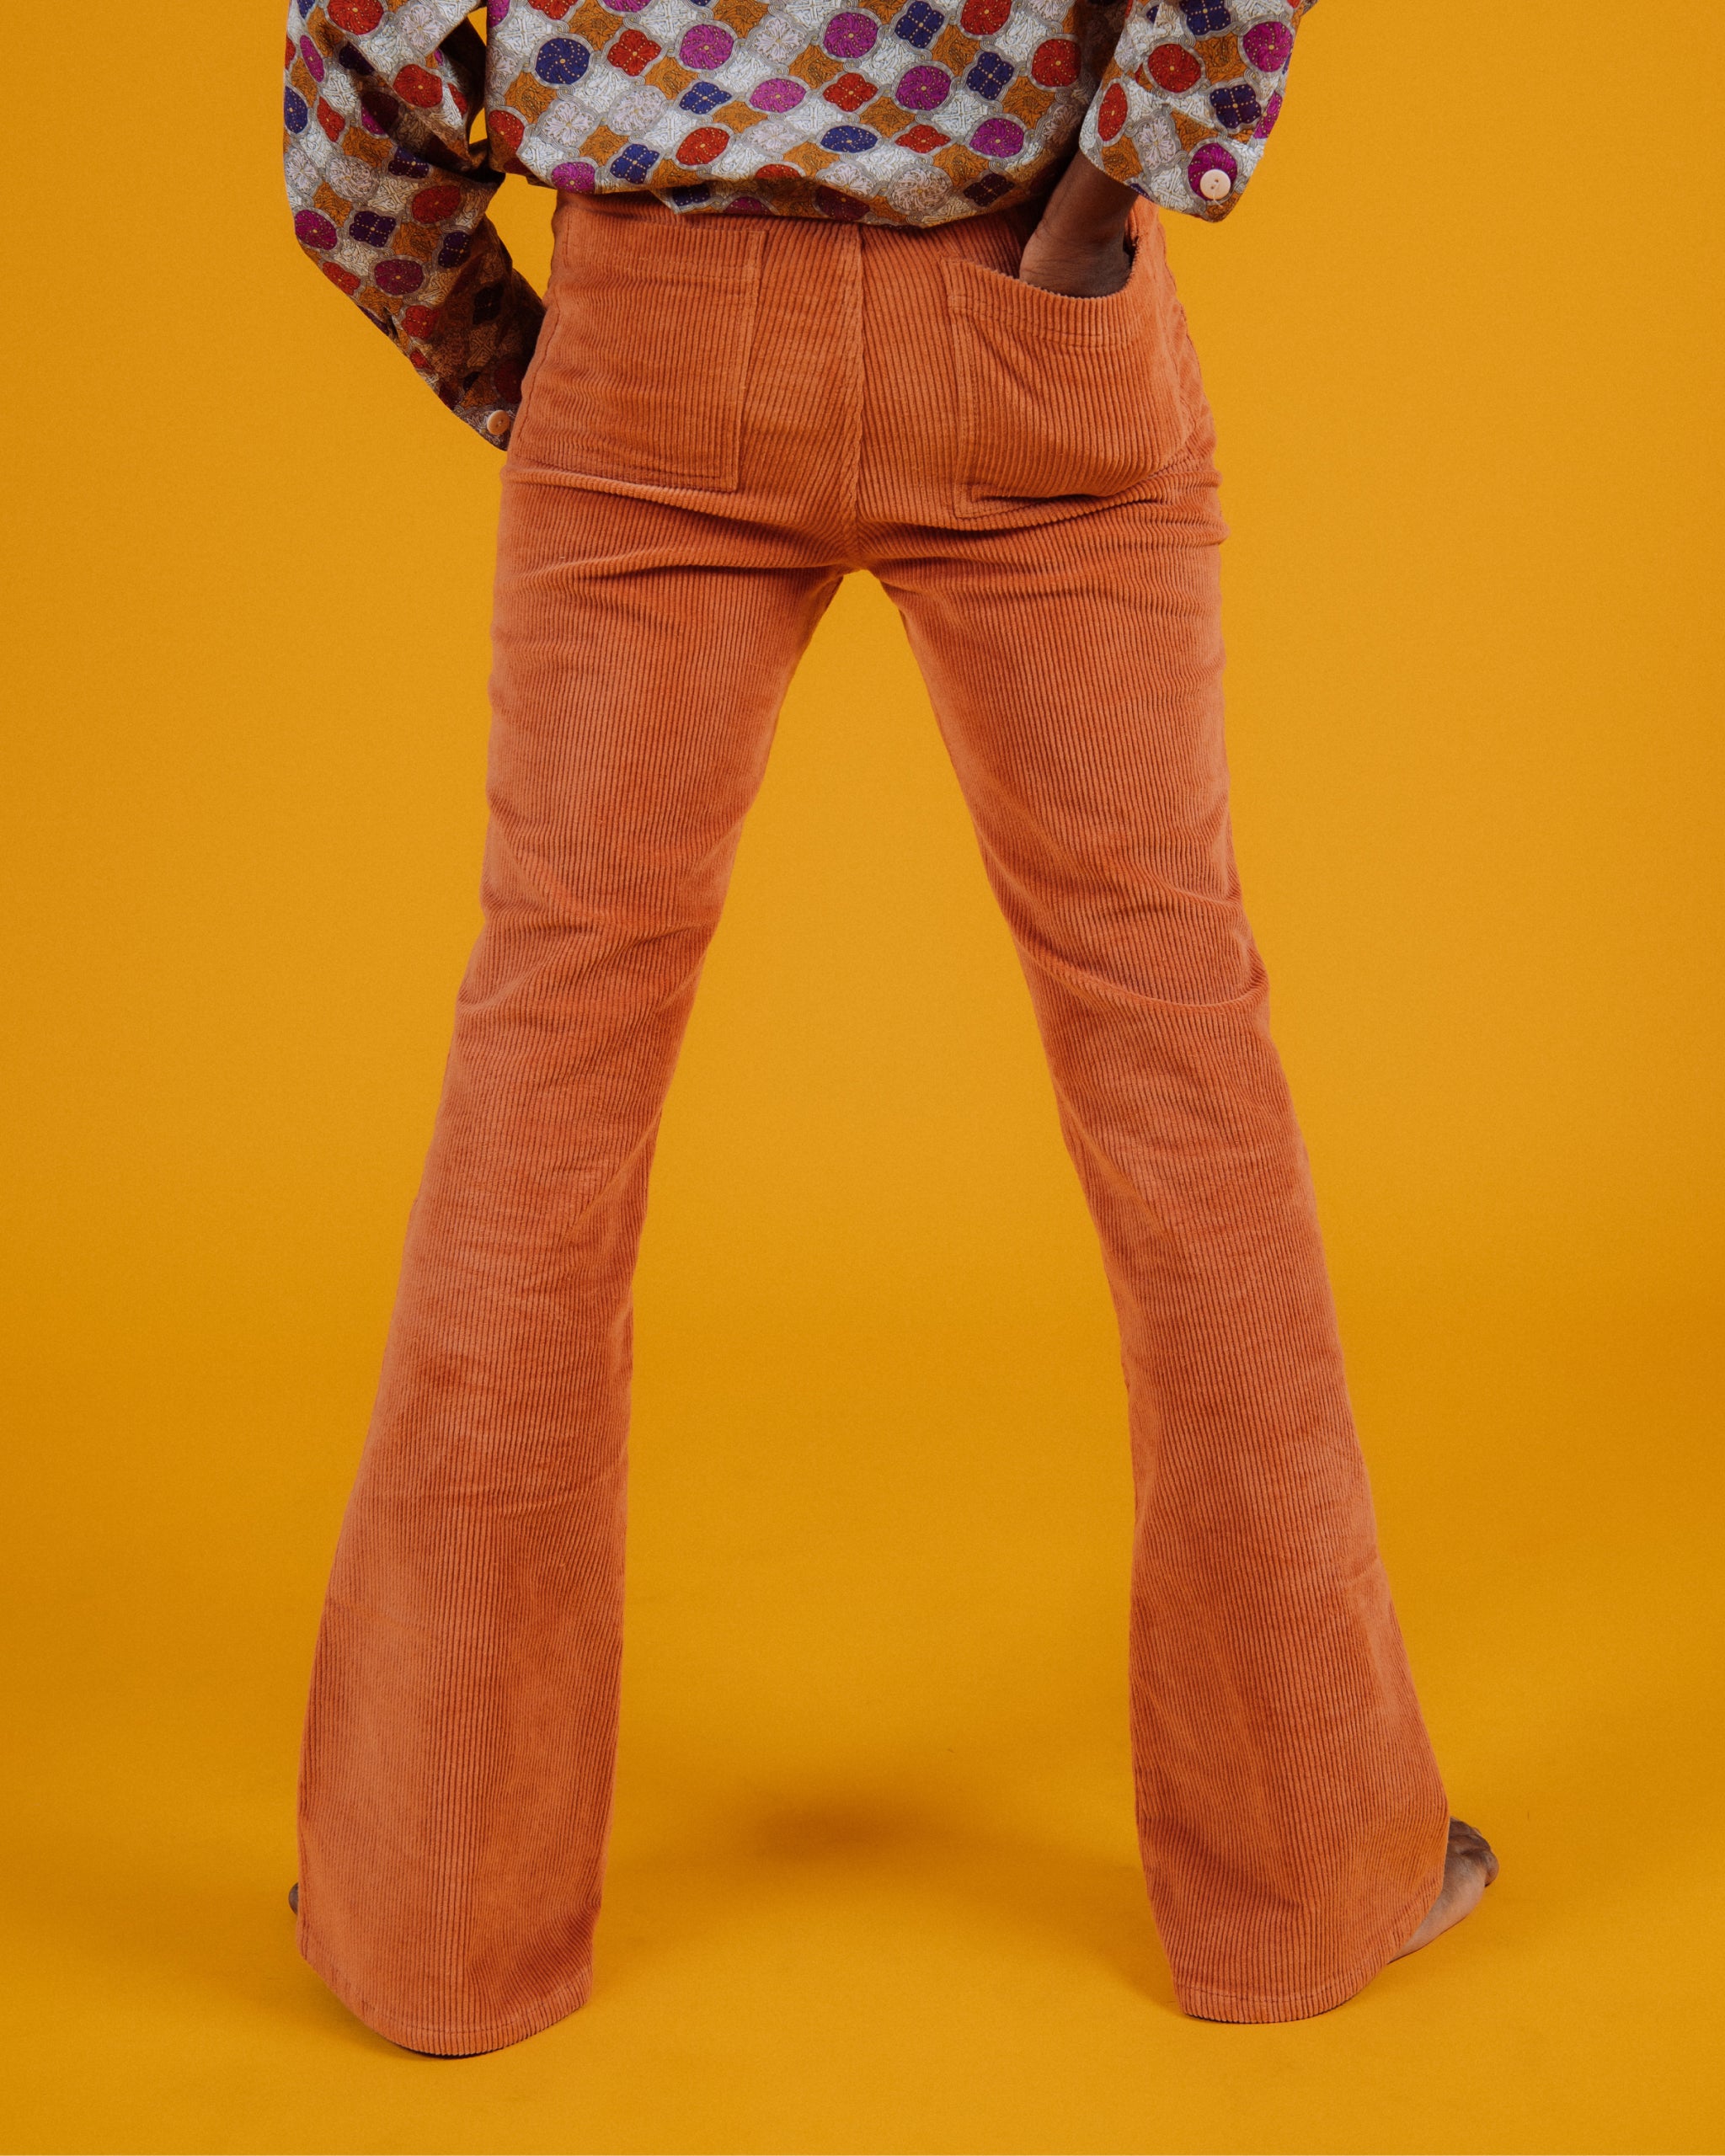 Men's Bell Bottom Pants 60s 70s Vintage Flare Formal Dress Trousers Slim  Fit SPW | eBay